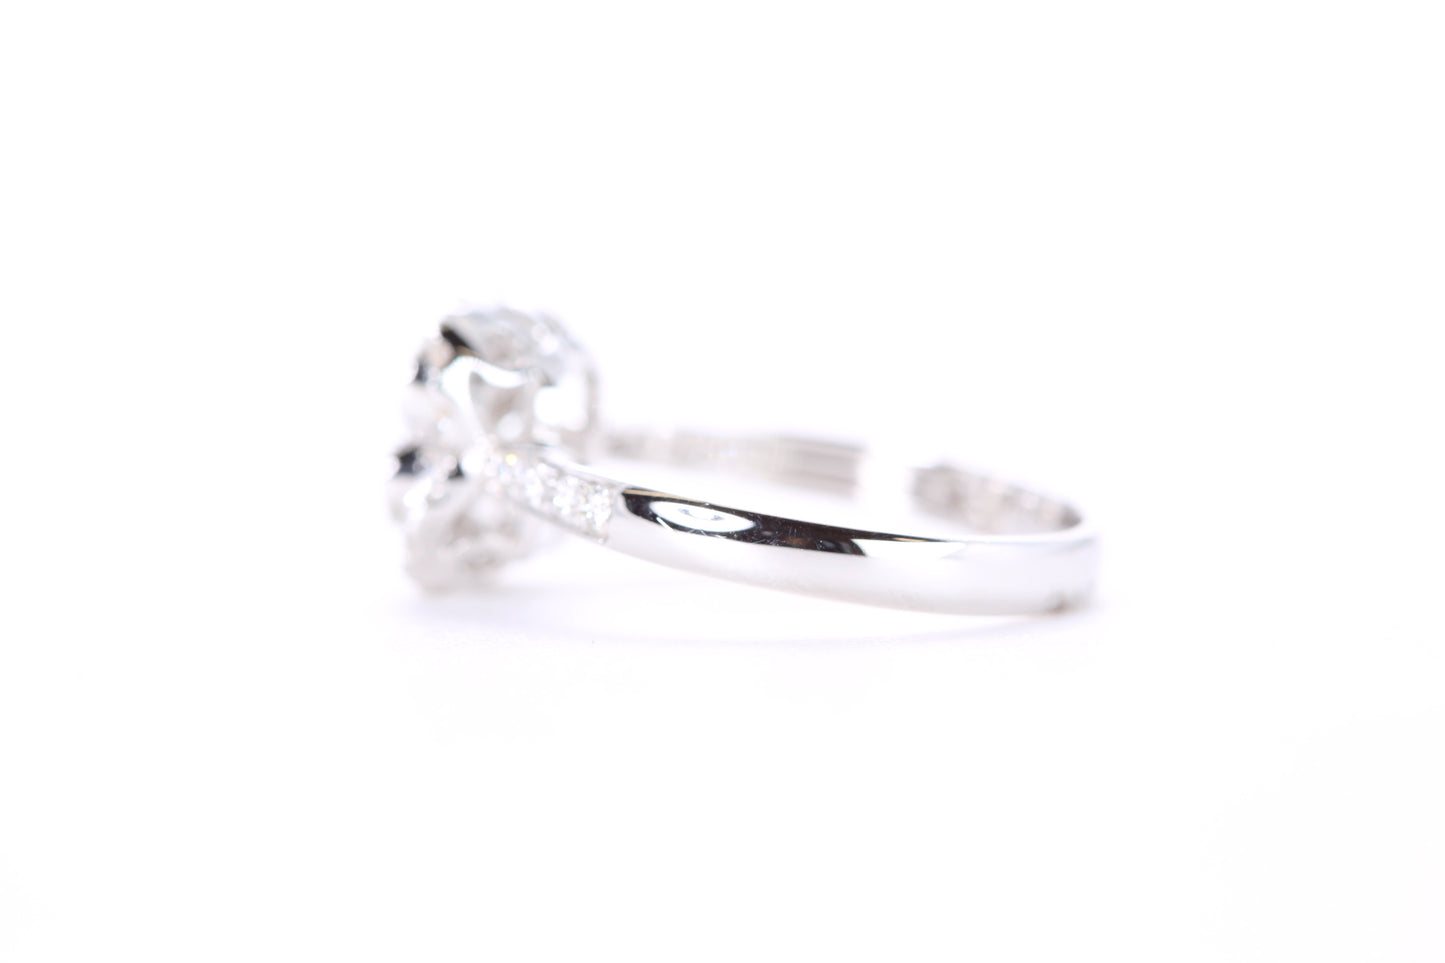 Flower Shaped Diamond Ring